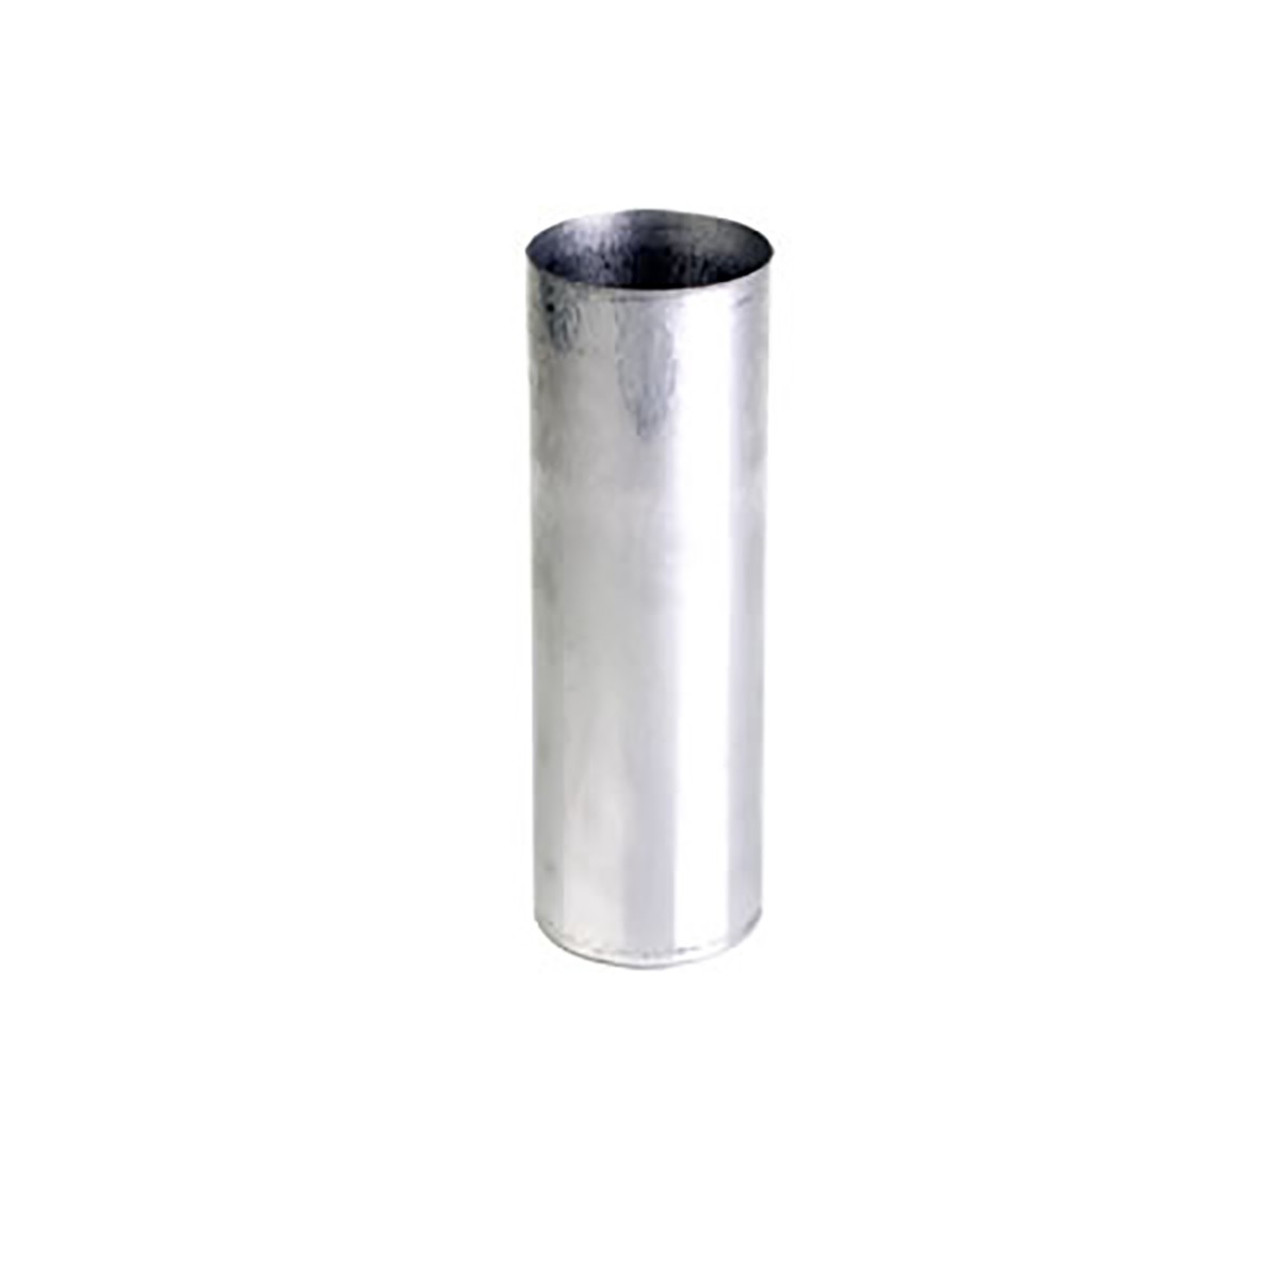 2 wide x 3.5 tall - Round Aluminum Pillar Candle Molds